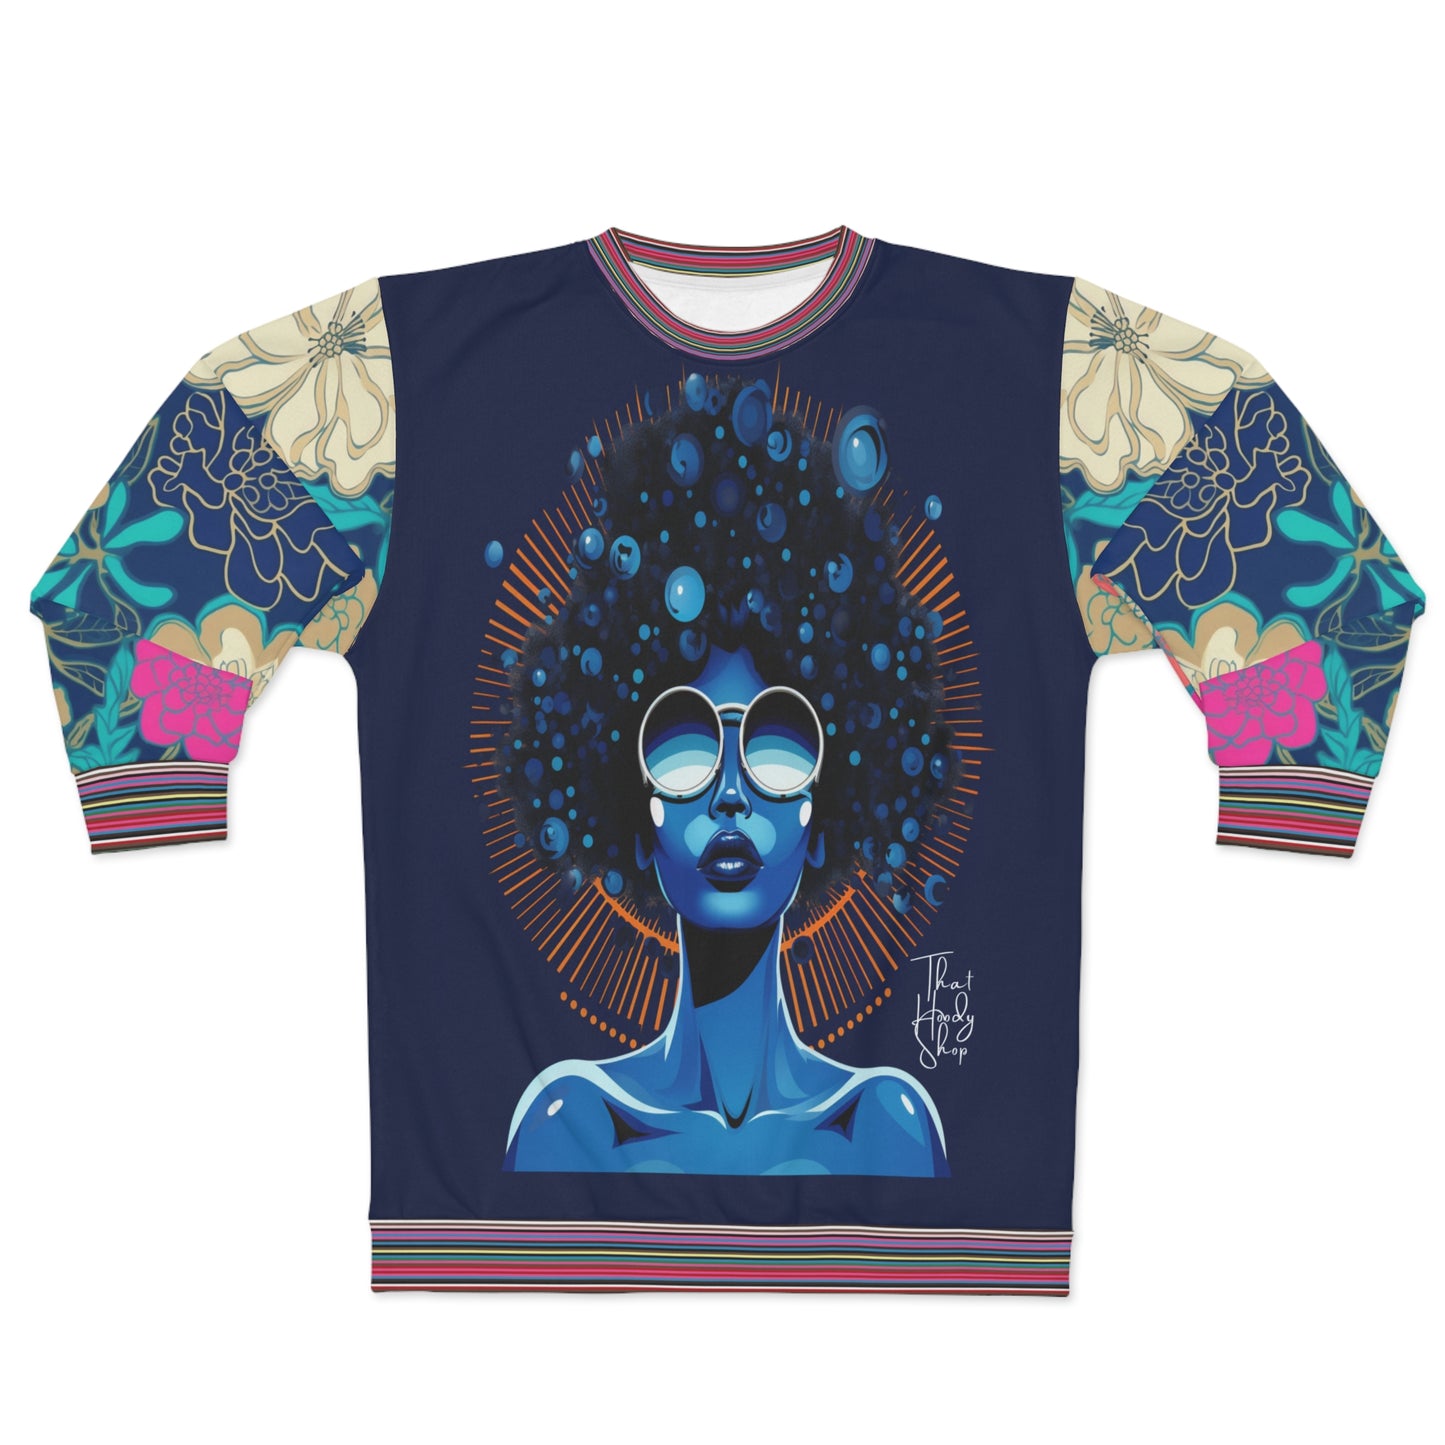 Blue Black Diva Queen in Midnight Unisex Sweatshirt